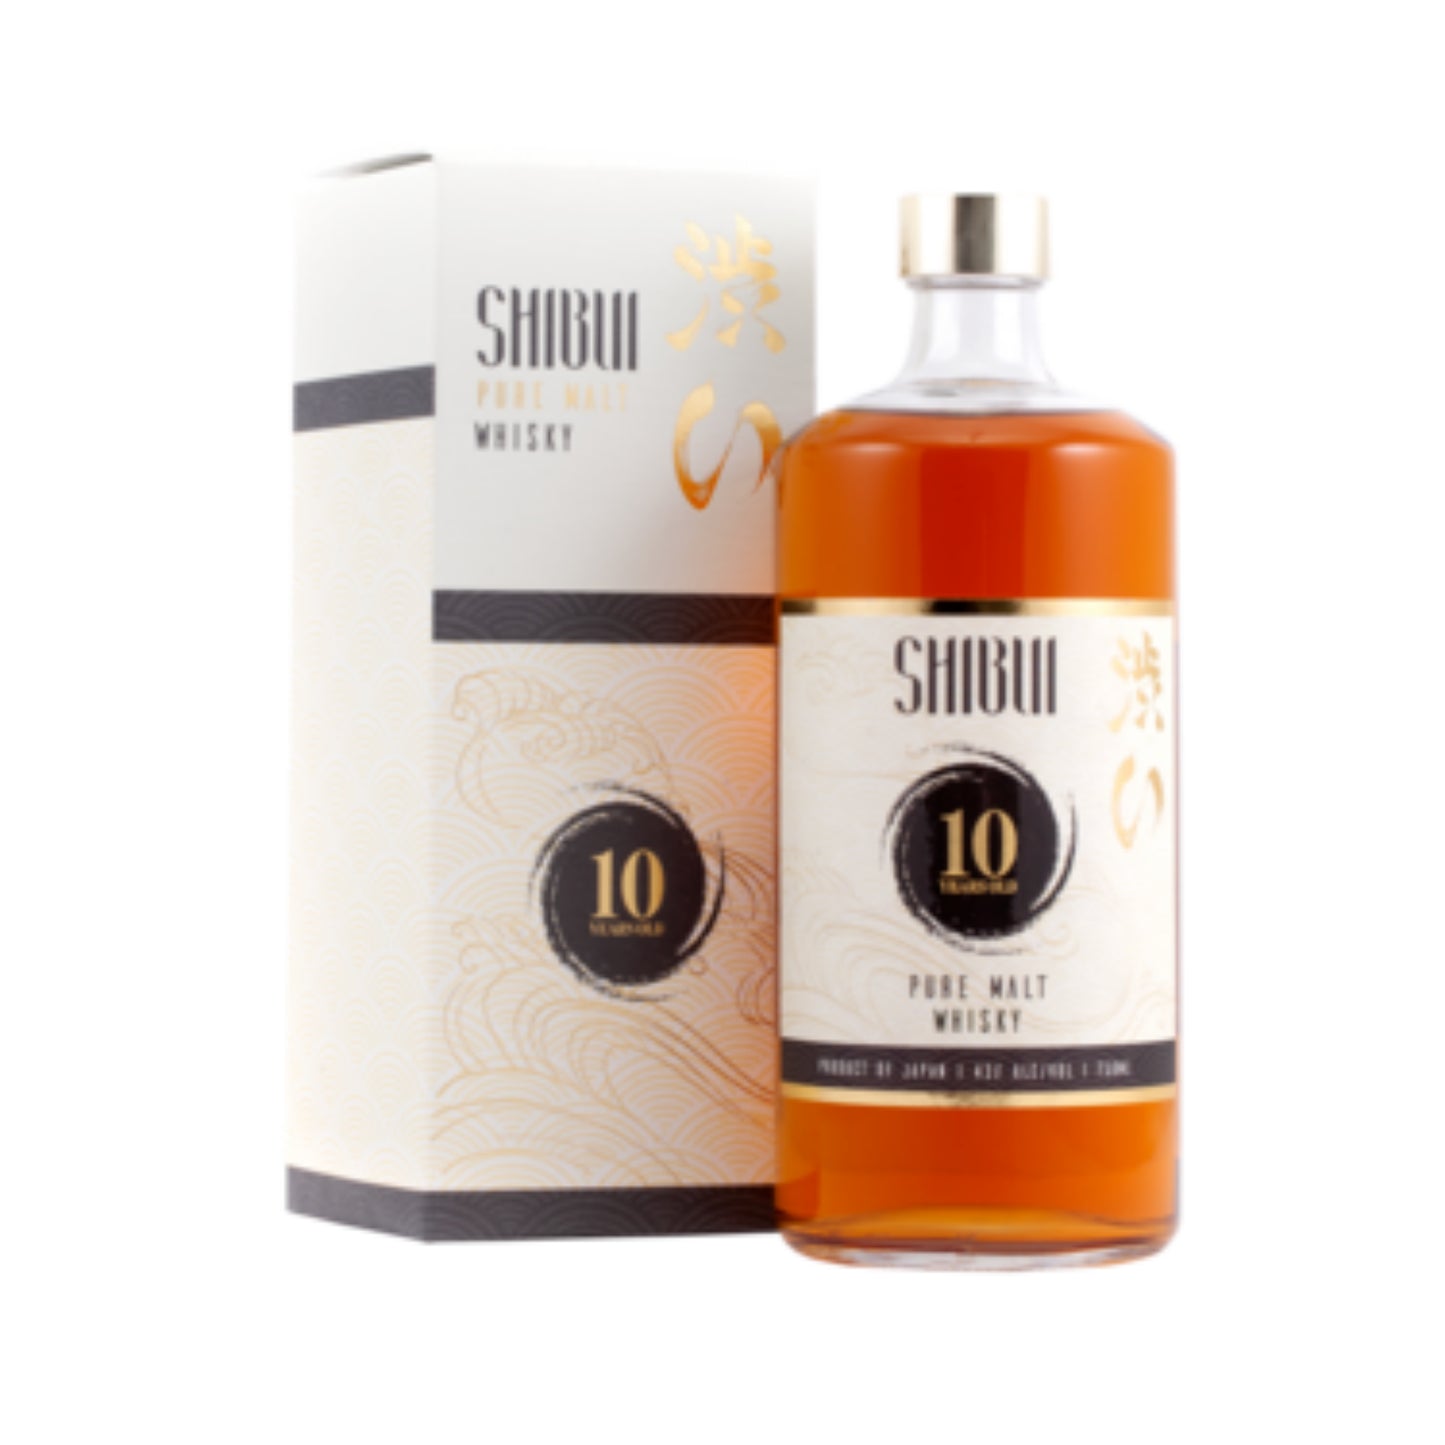 Shibui Pure Malt Japanese Whisky 10 Year - Liquor Geeks